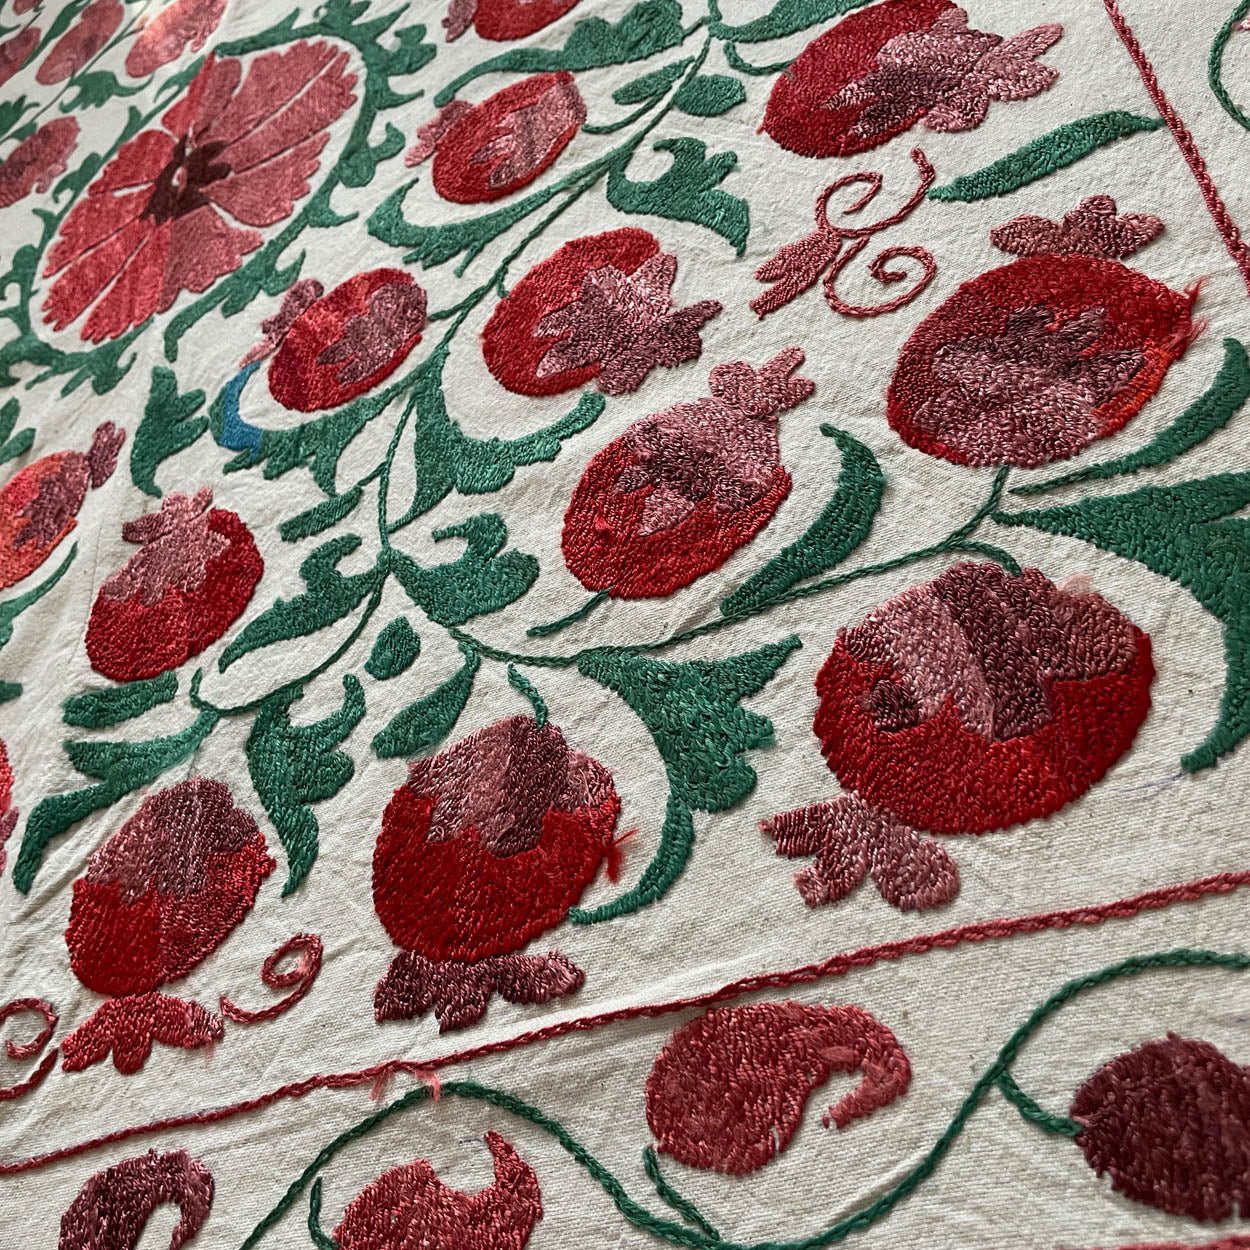 Uzbeki Suzani Hand Embroidered Textile Wall Hanging | Home Décor | Runner | 110cm x 96cm SUZ220518013 - Wildash London